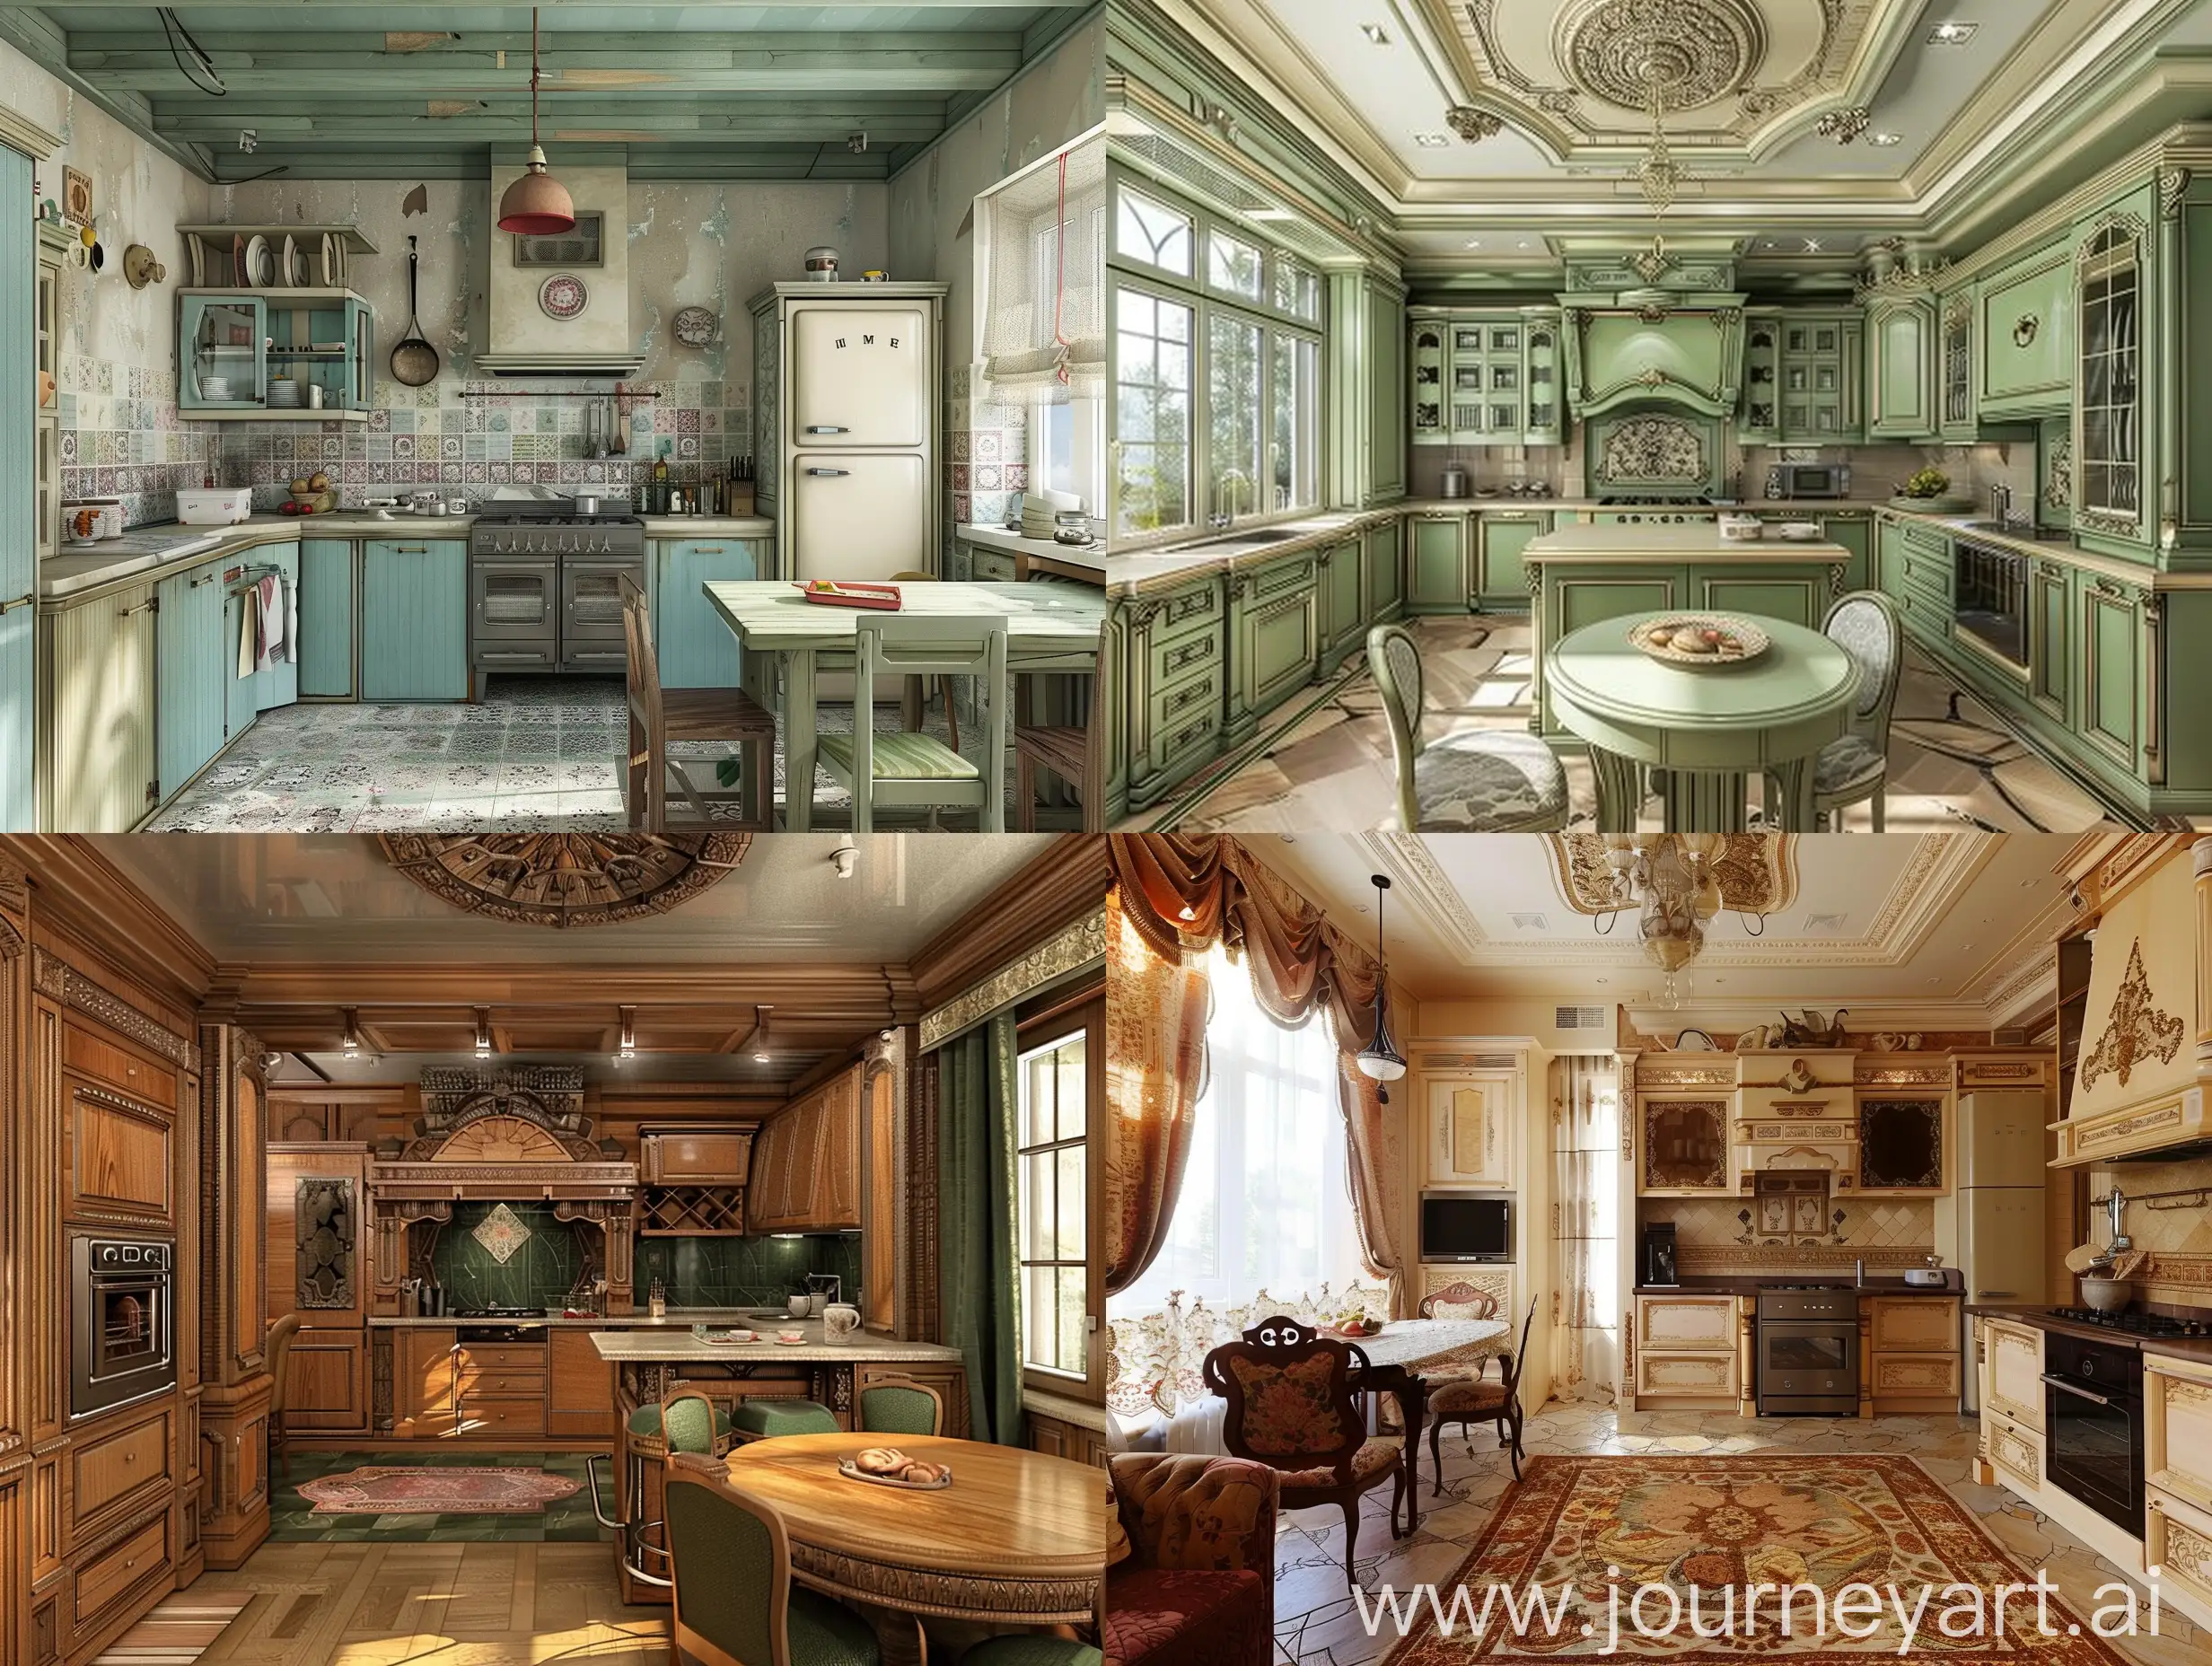 Vintage-Kitchen-Interior-with-70s80s-Style-Decor